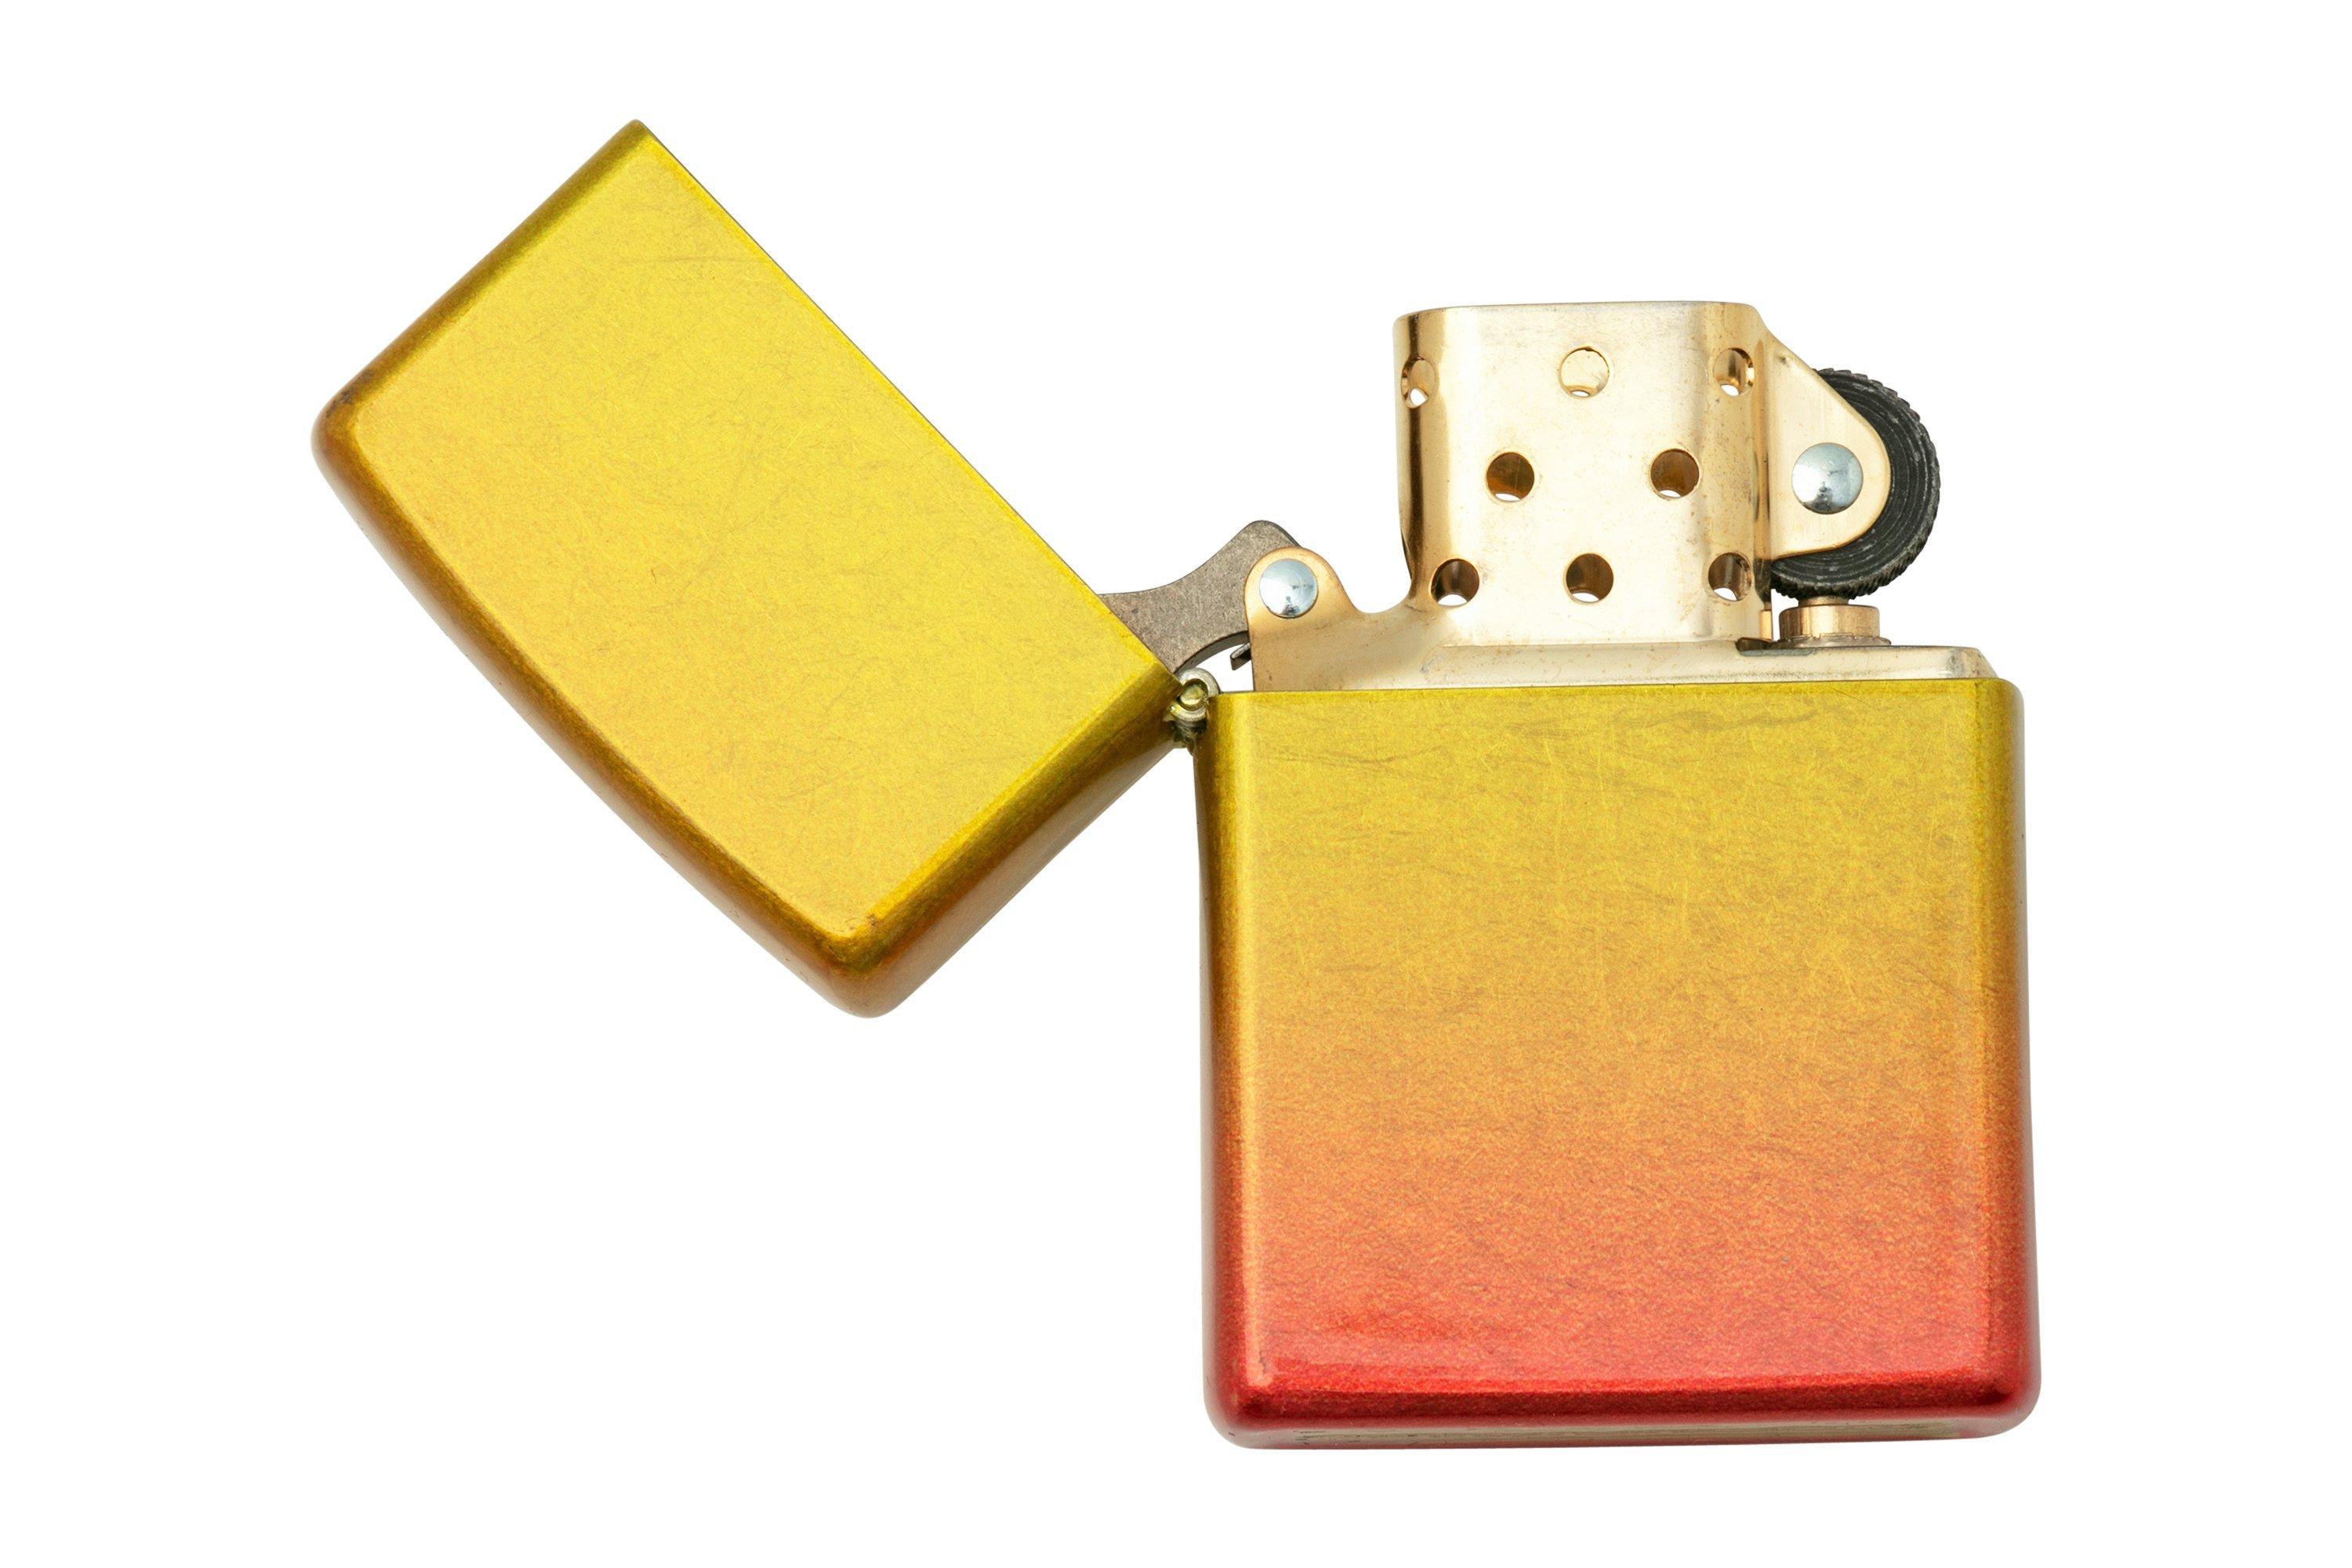 zippo-ombre-orange-yellow-48512-000002-lighter-advantageously